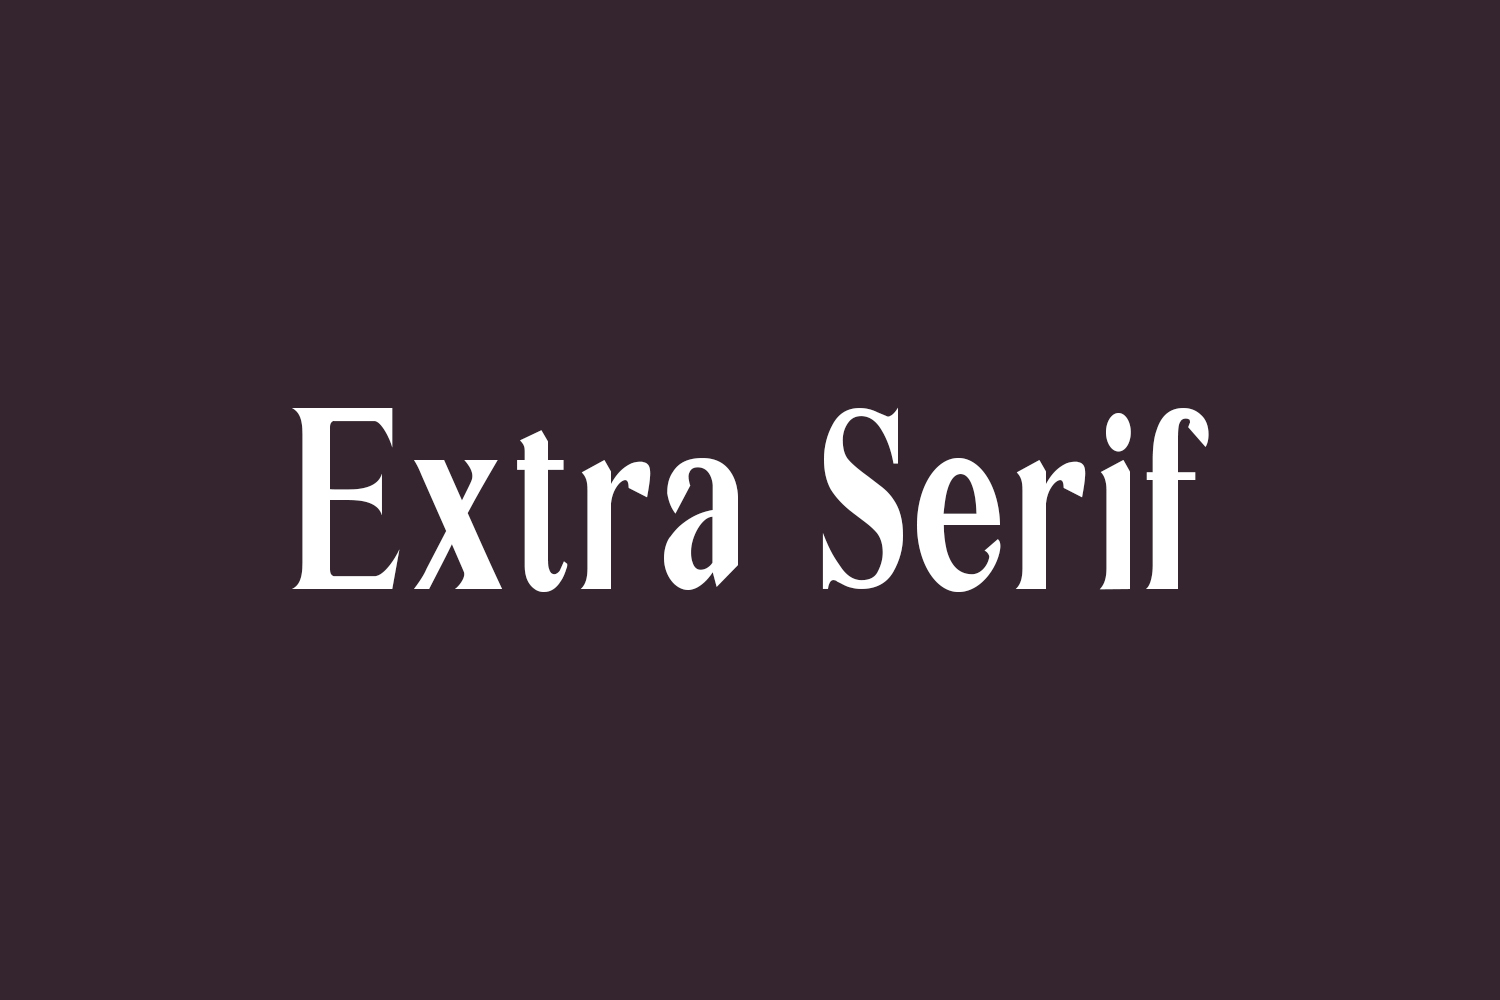 Extra Serif Free Font